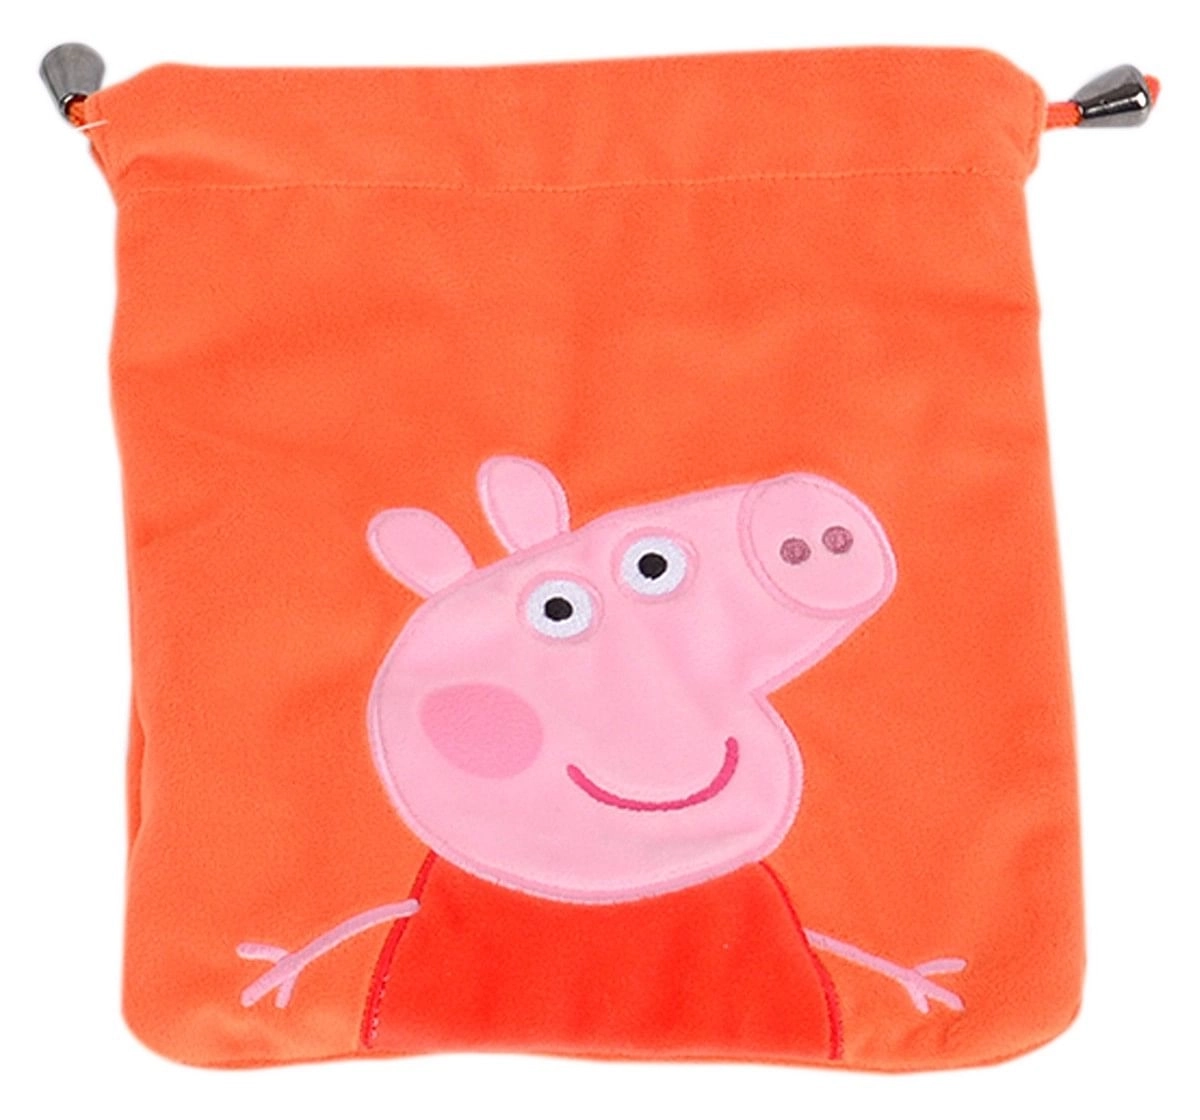 Peppa Pig Plush Toy Bag for Kids age 1Y+ (Orange)